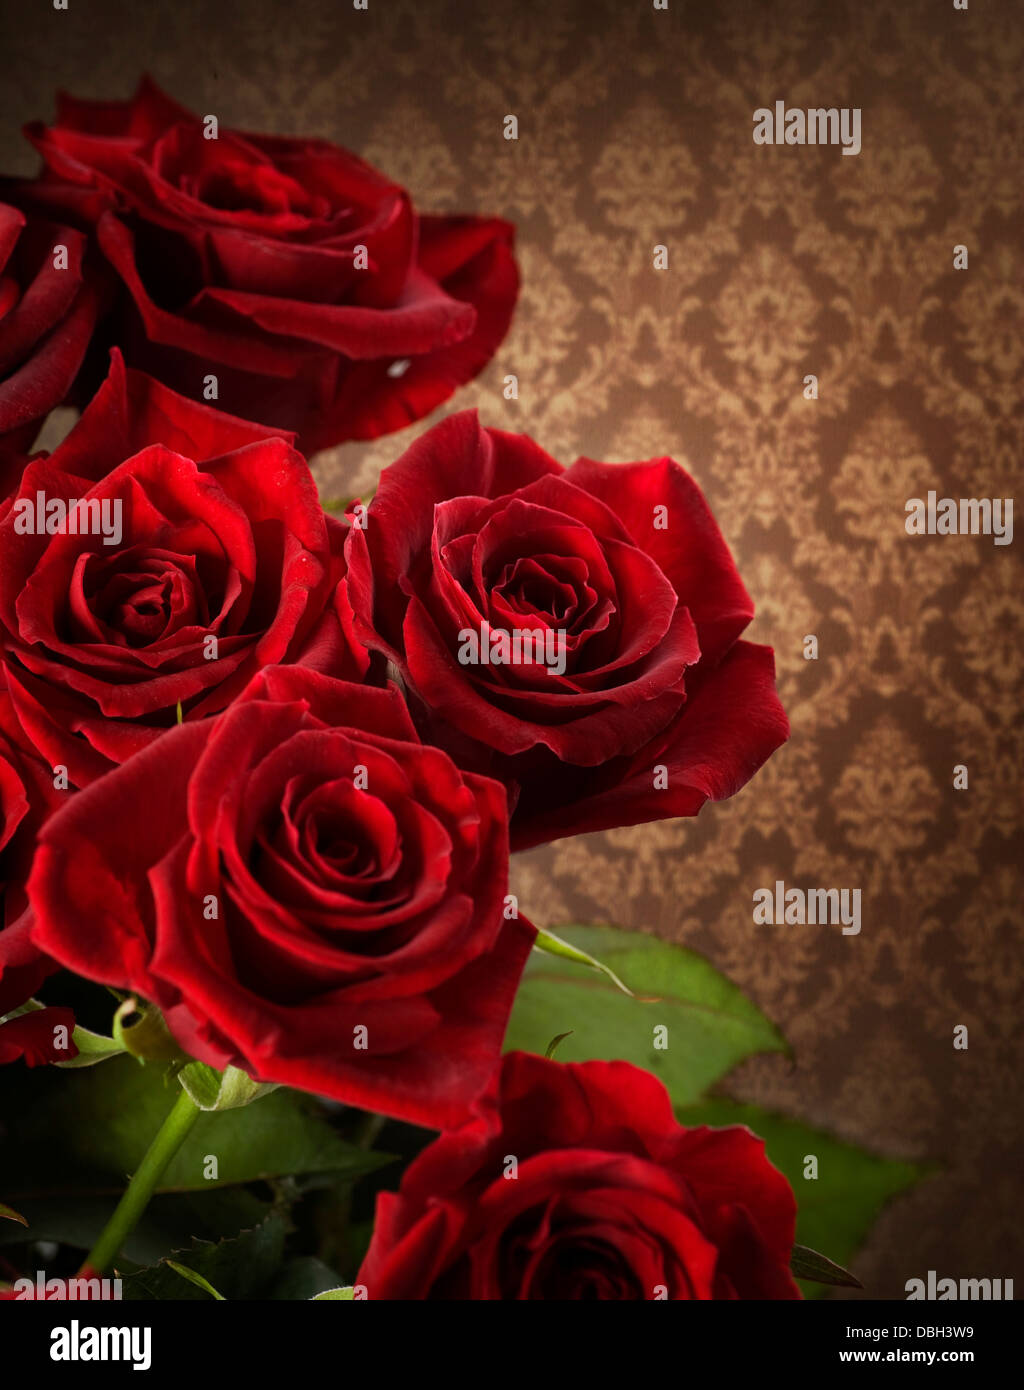 Rose rosse Bouquet. In stile vintage Foto stock - Alamy